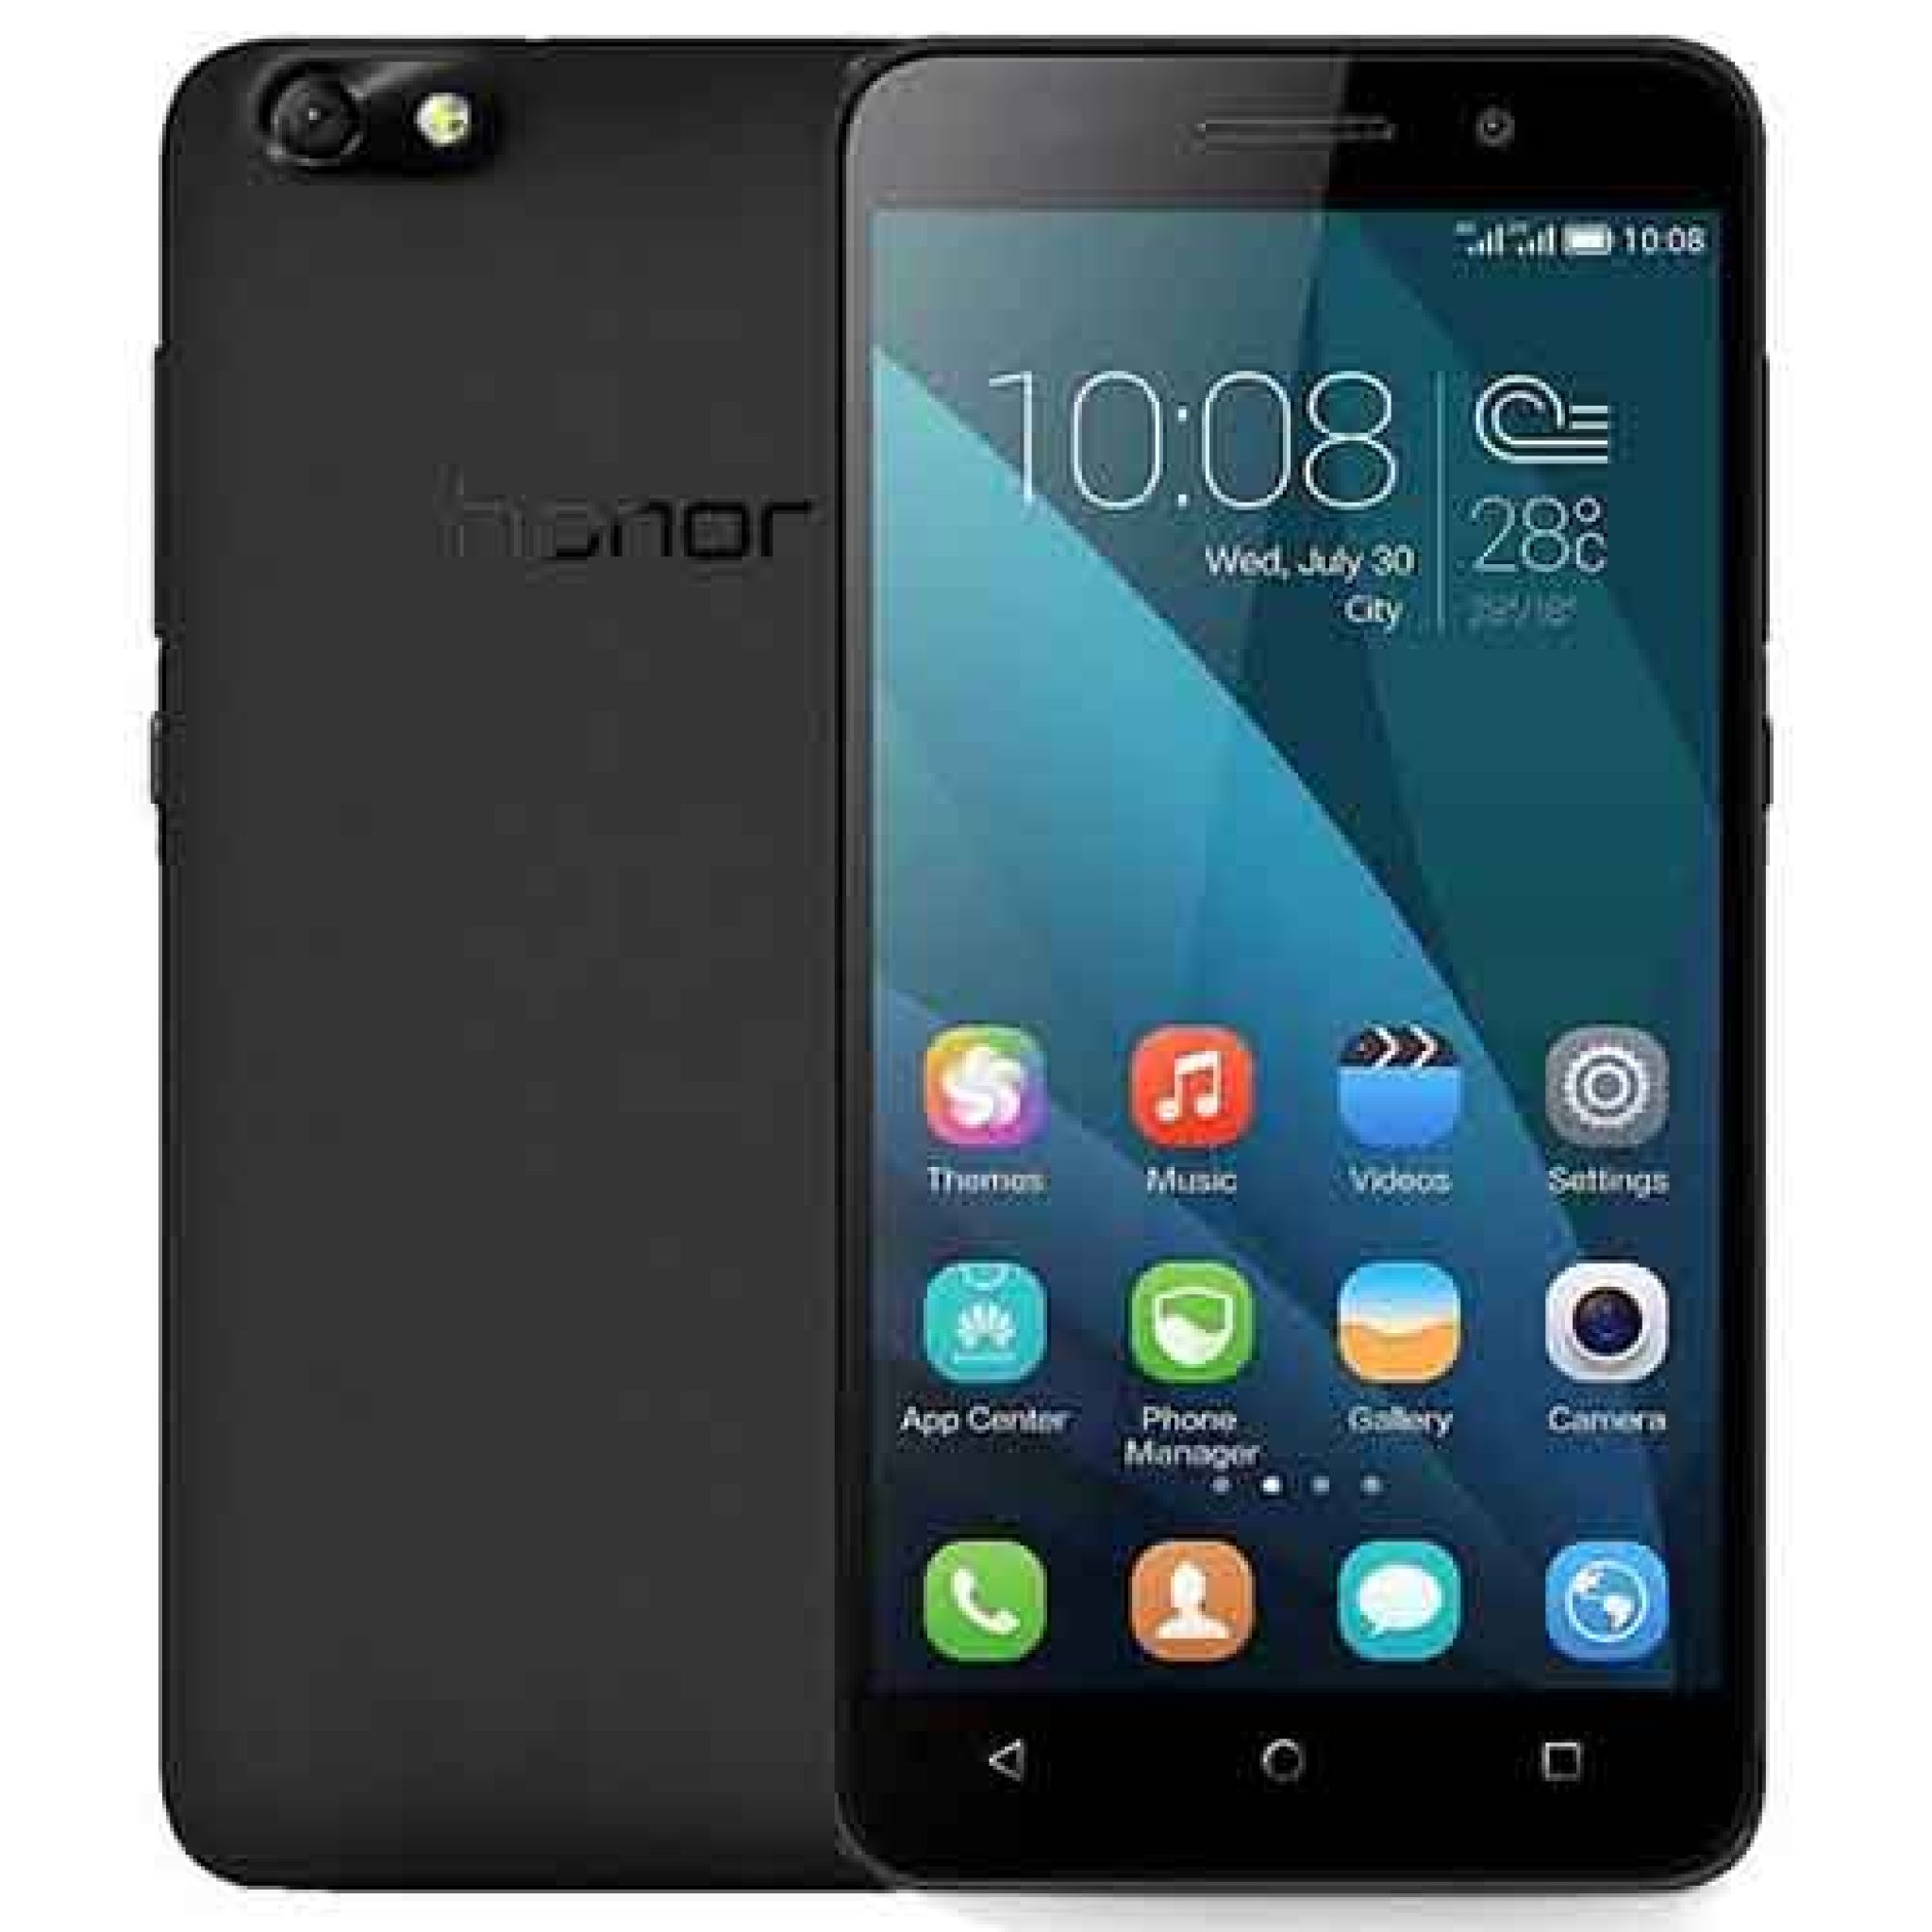 Huawei honor x. Huawei Honor 4. Huawei Honor 4x. Huawei Honor 4x che2-l11. Телефон Honor x4 Pro.